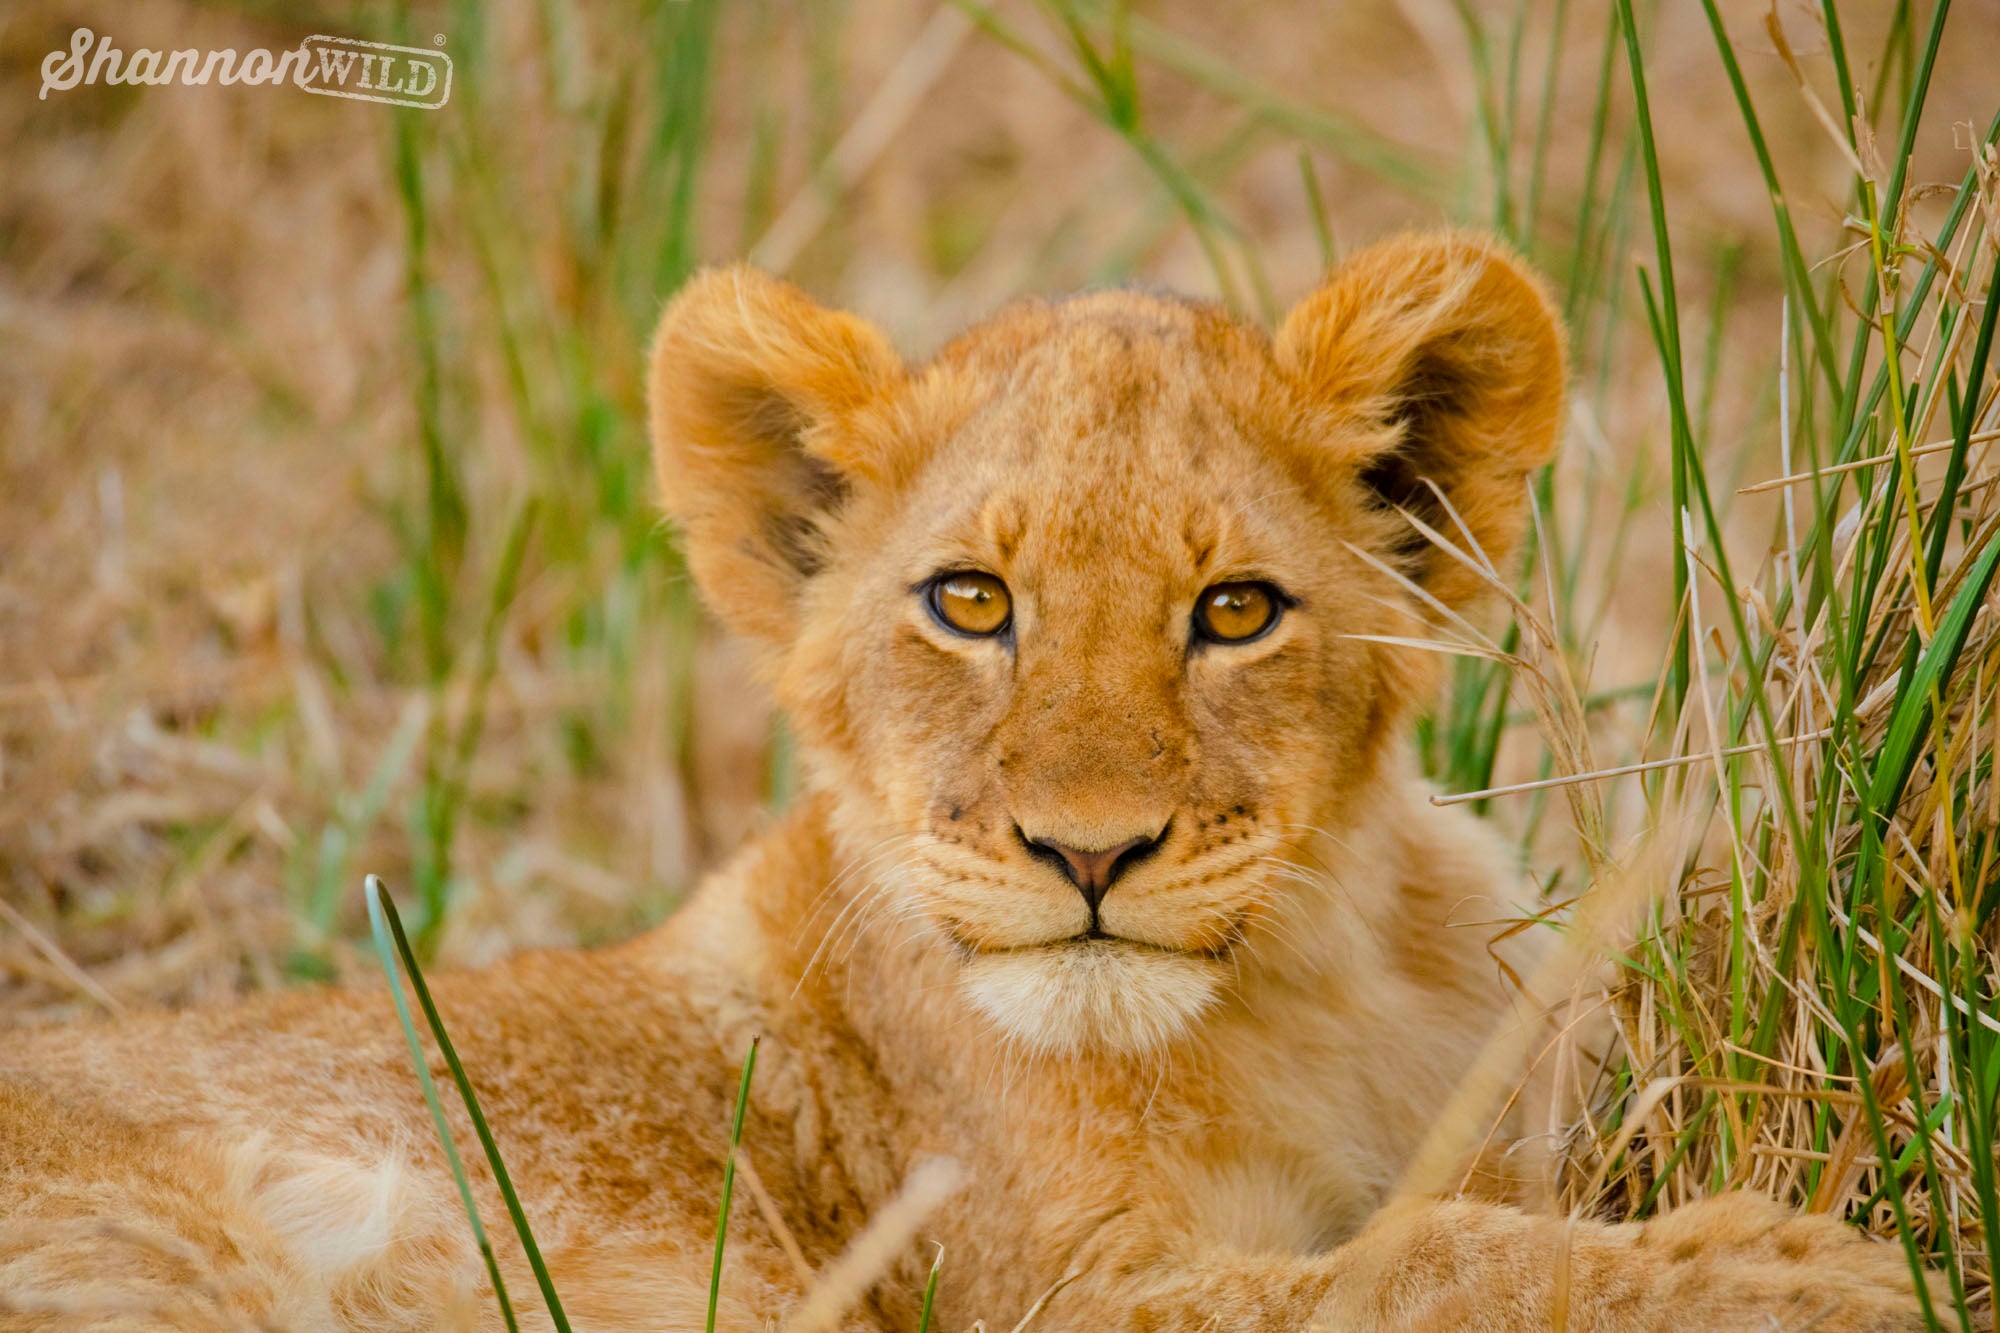 Lion cub photo by Shannon Wild